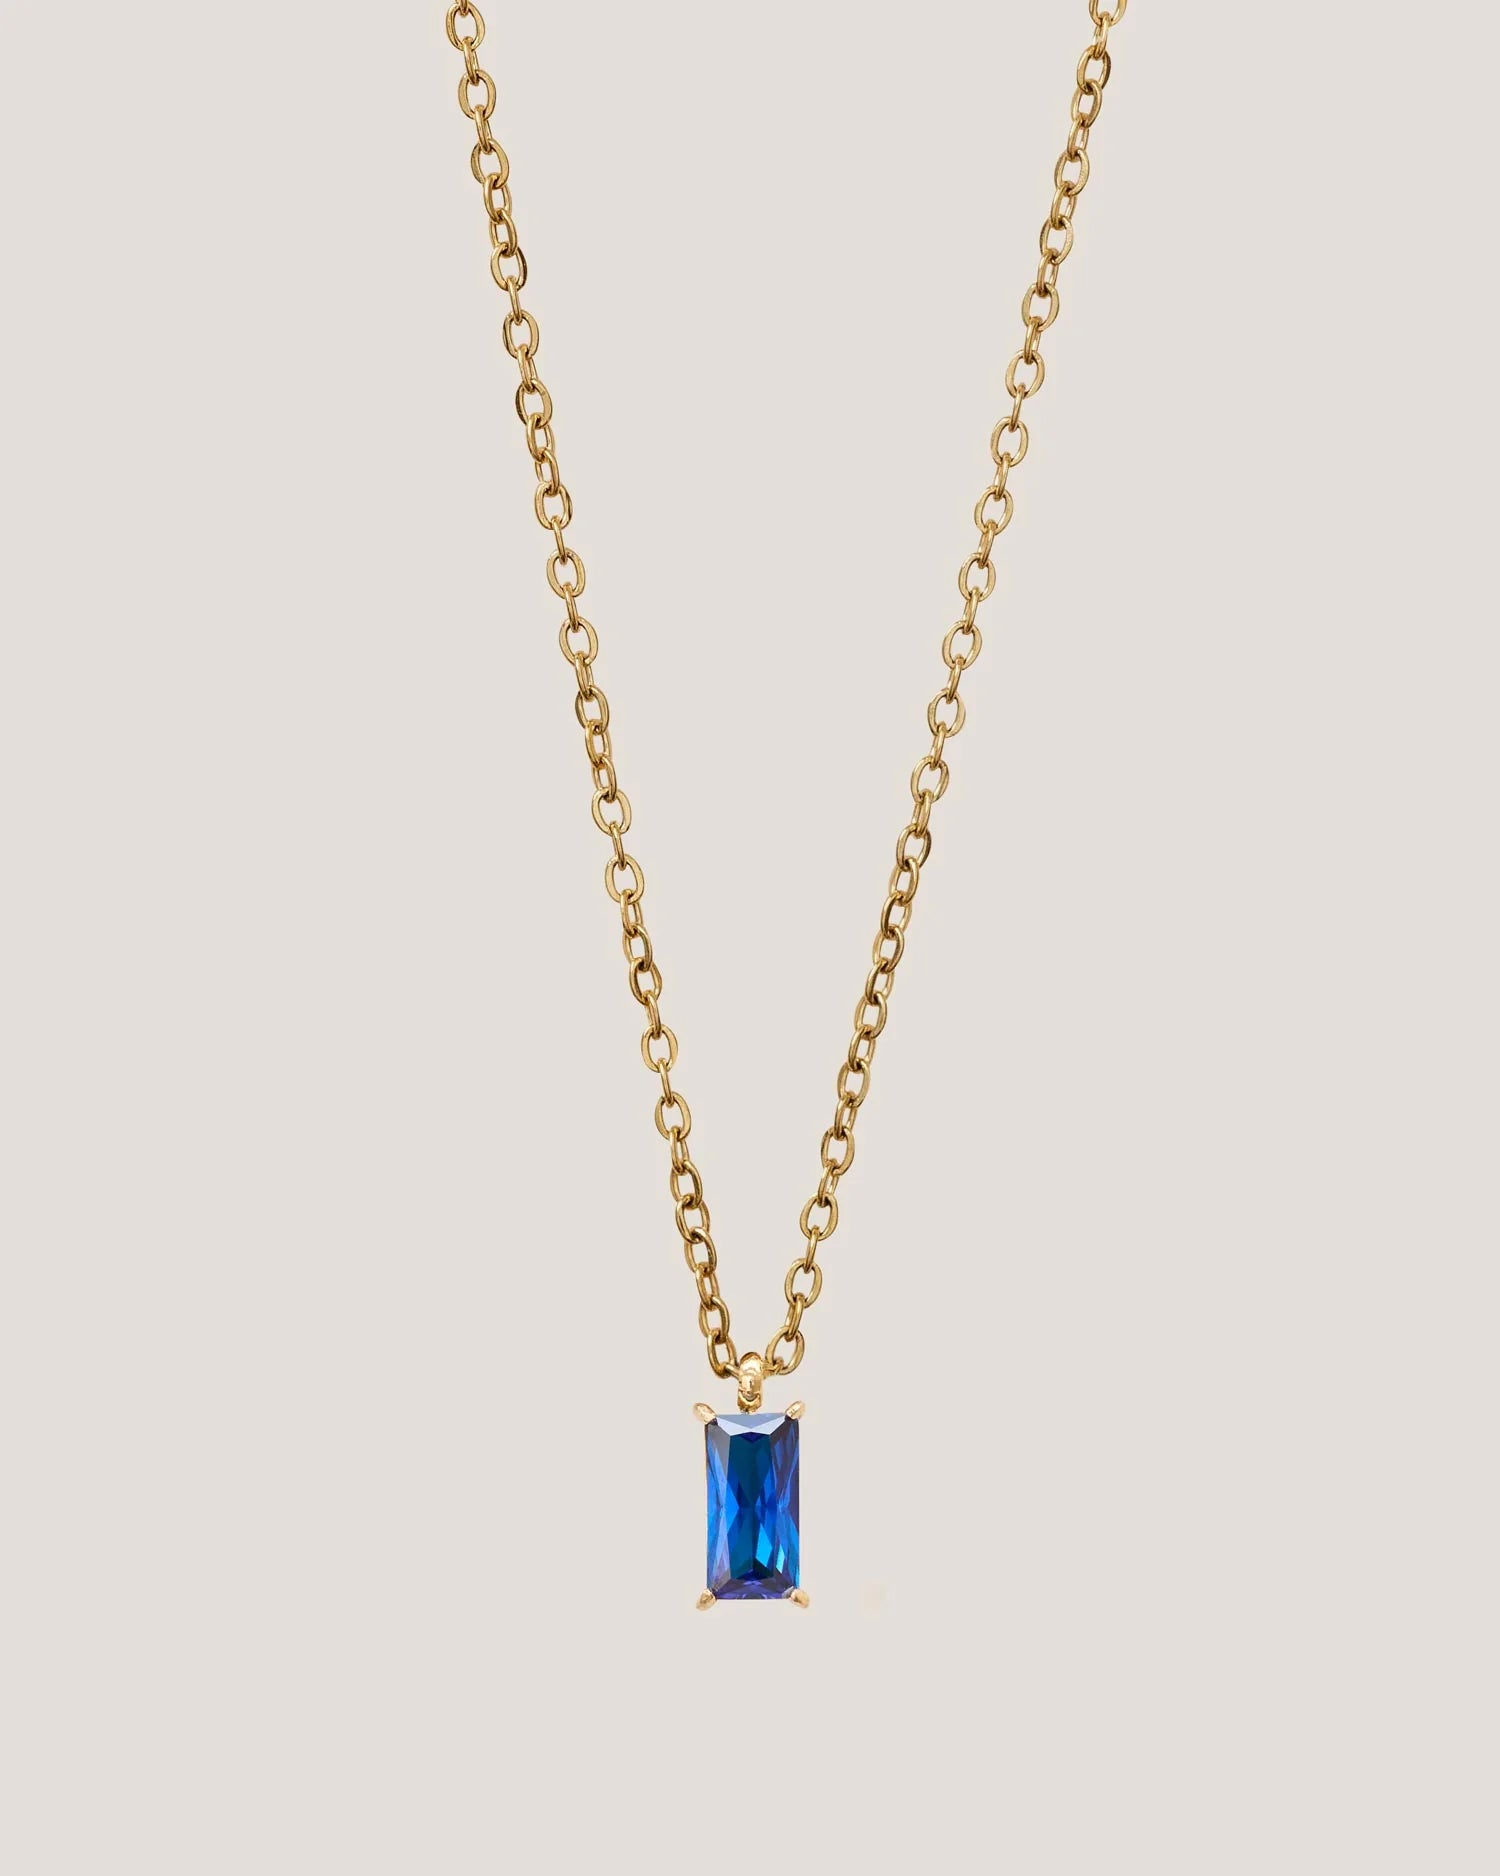 GUNG JEWELLERY Necklace : Blue Sapphire Pendant